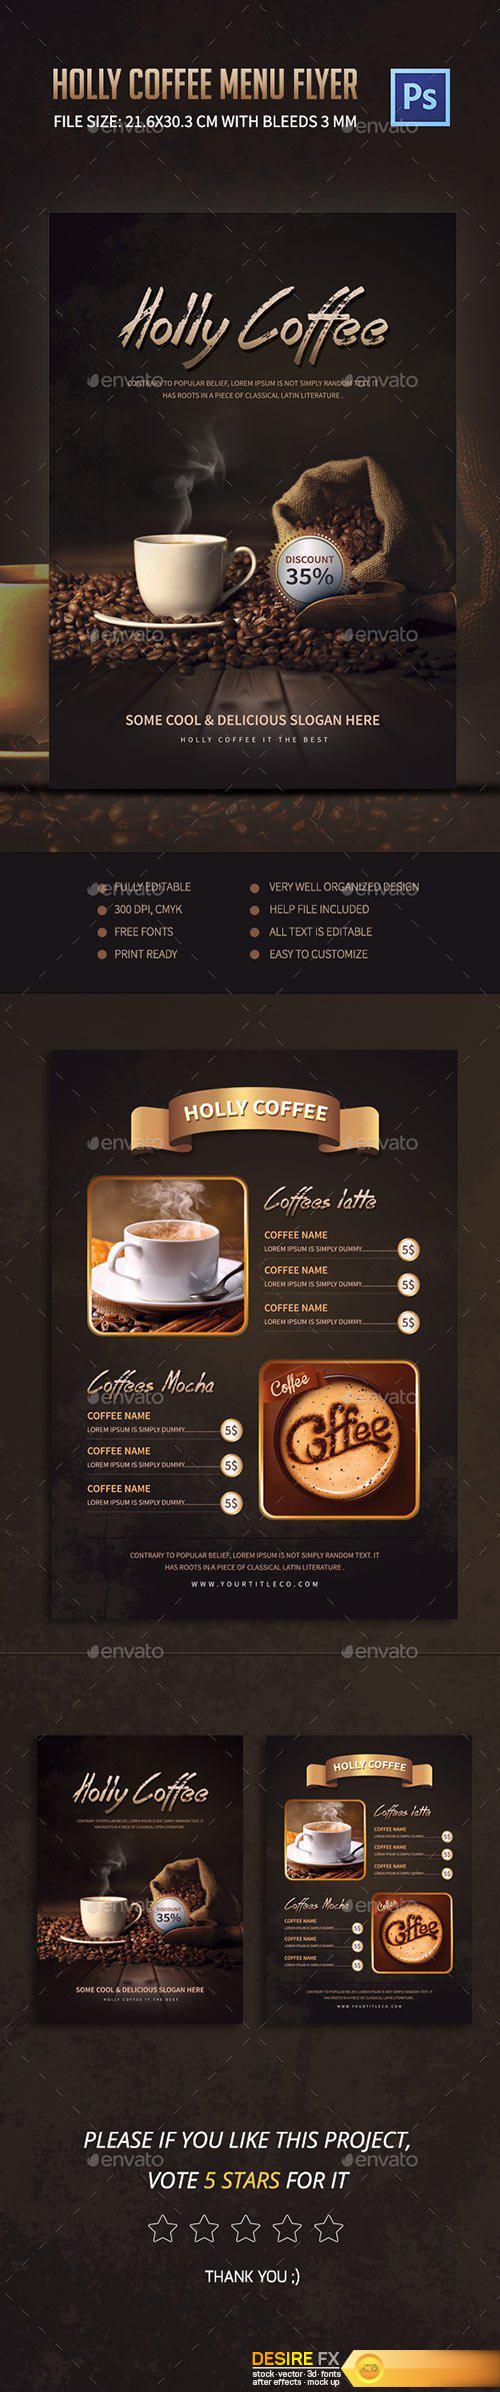 Graphicriver - Holly Coffee Menu Flyer 12070995